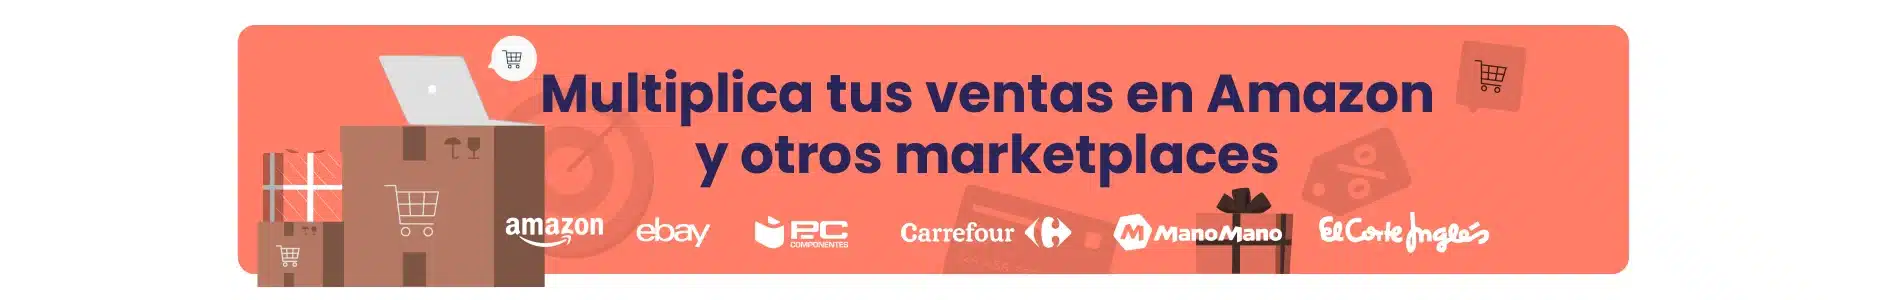 banner agencia marketplace 1900x300 1